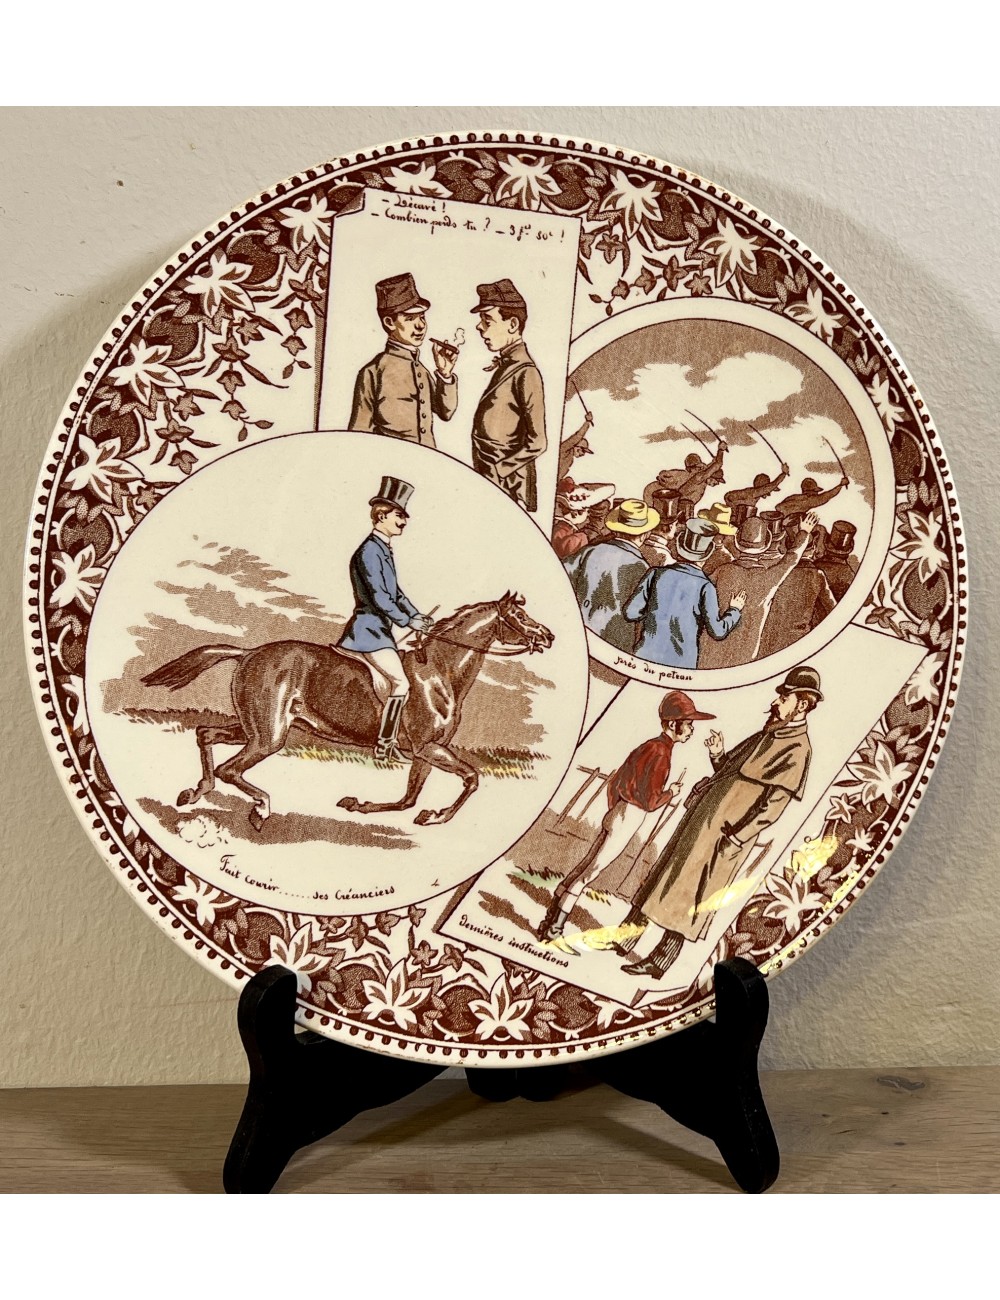 Decorative plate / Plate - Sarreguemines - décor including man on horseback and spectators